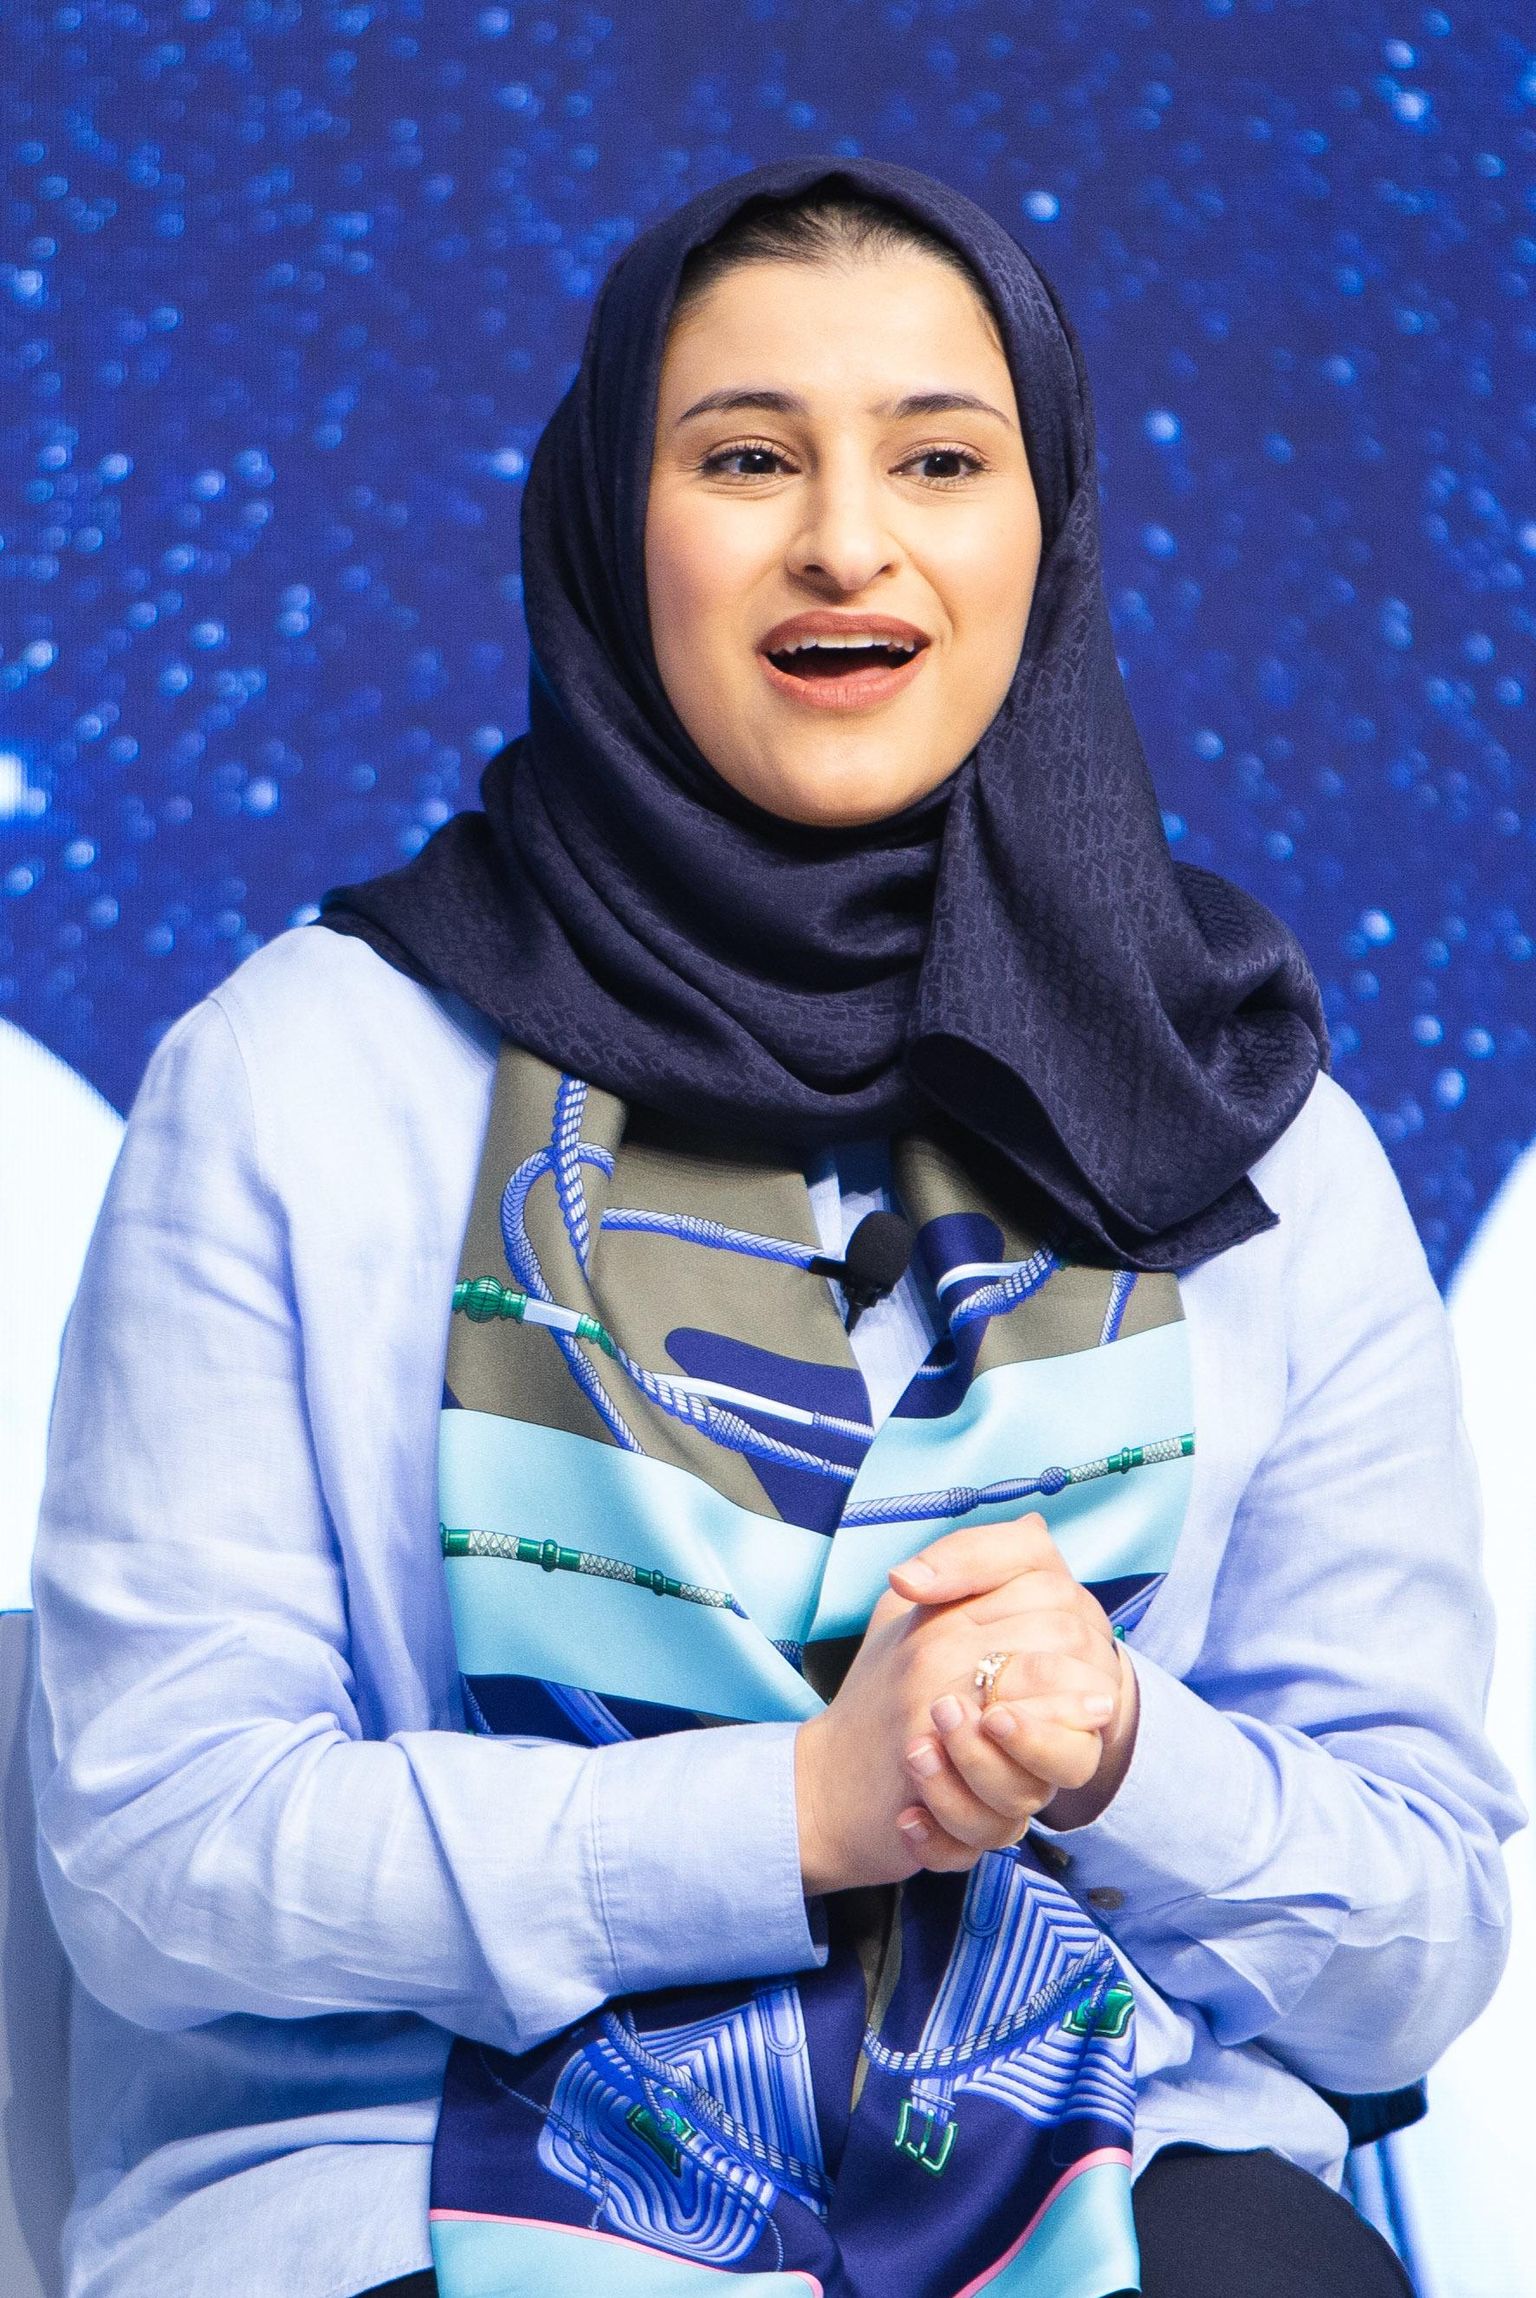 Sarah bint Yousif Al-Amiri.